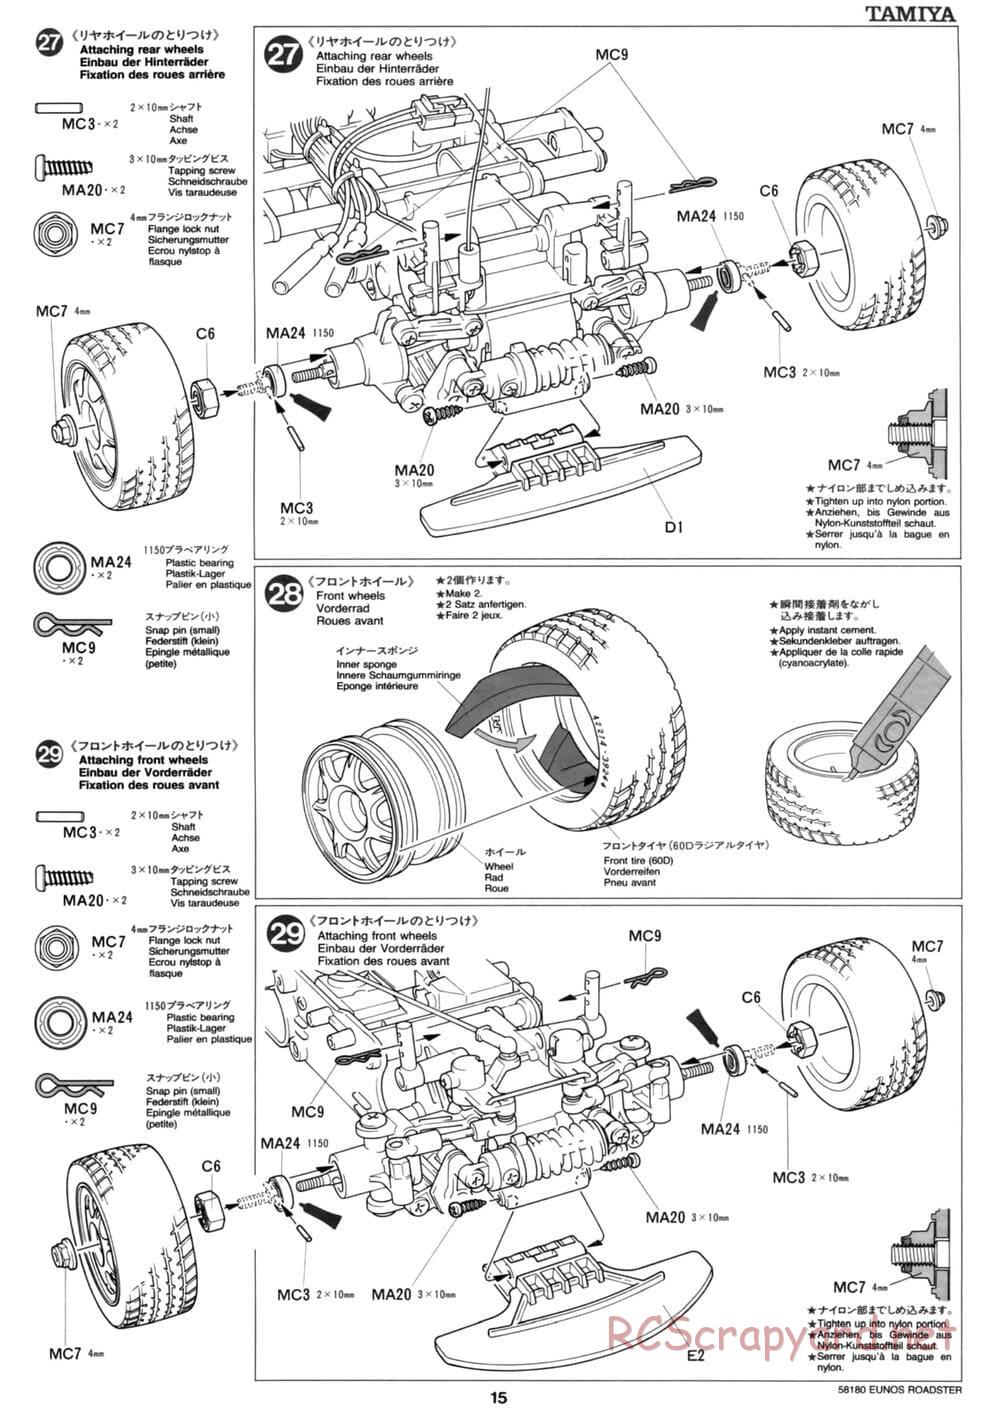 Tamiya - Eunos Roadster - M02M Chassis - Manual - Page 15